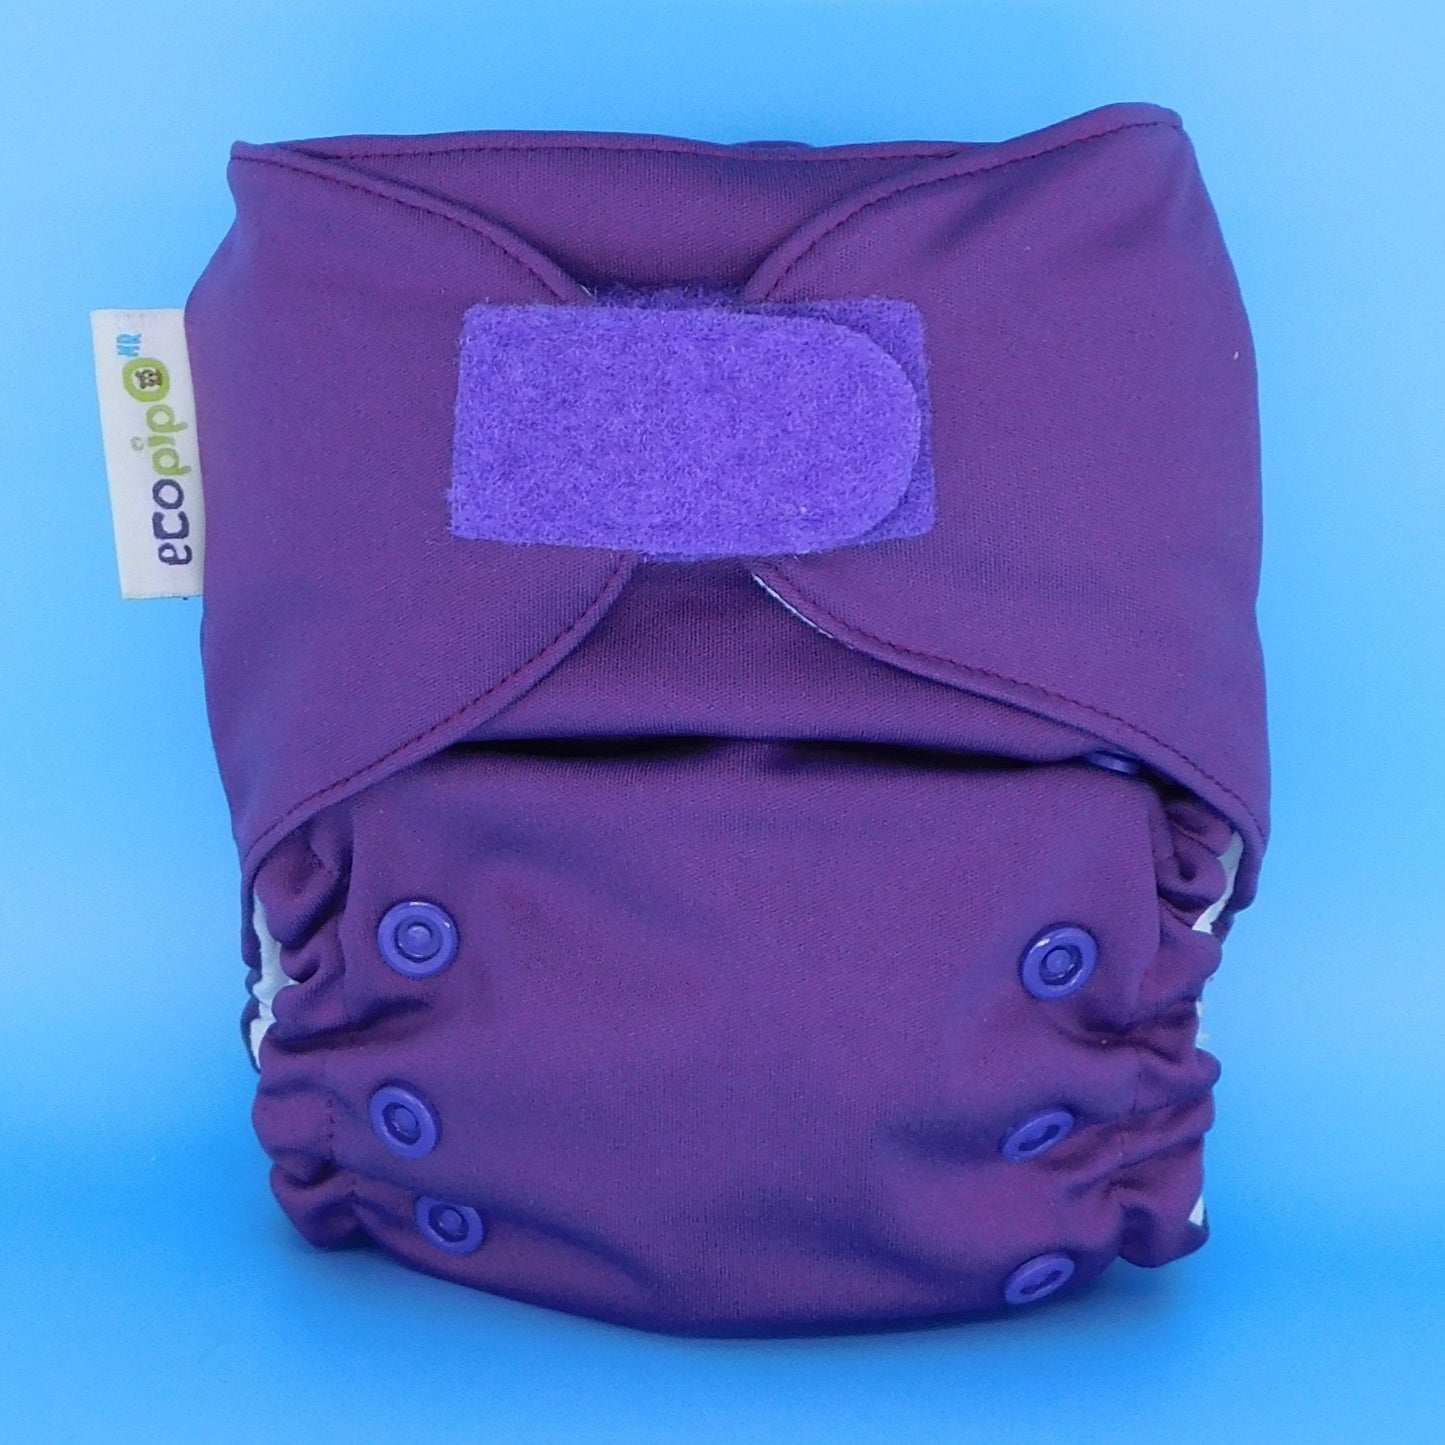 One Size G3 Pocket Nappy - Plain